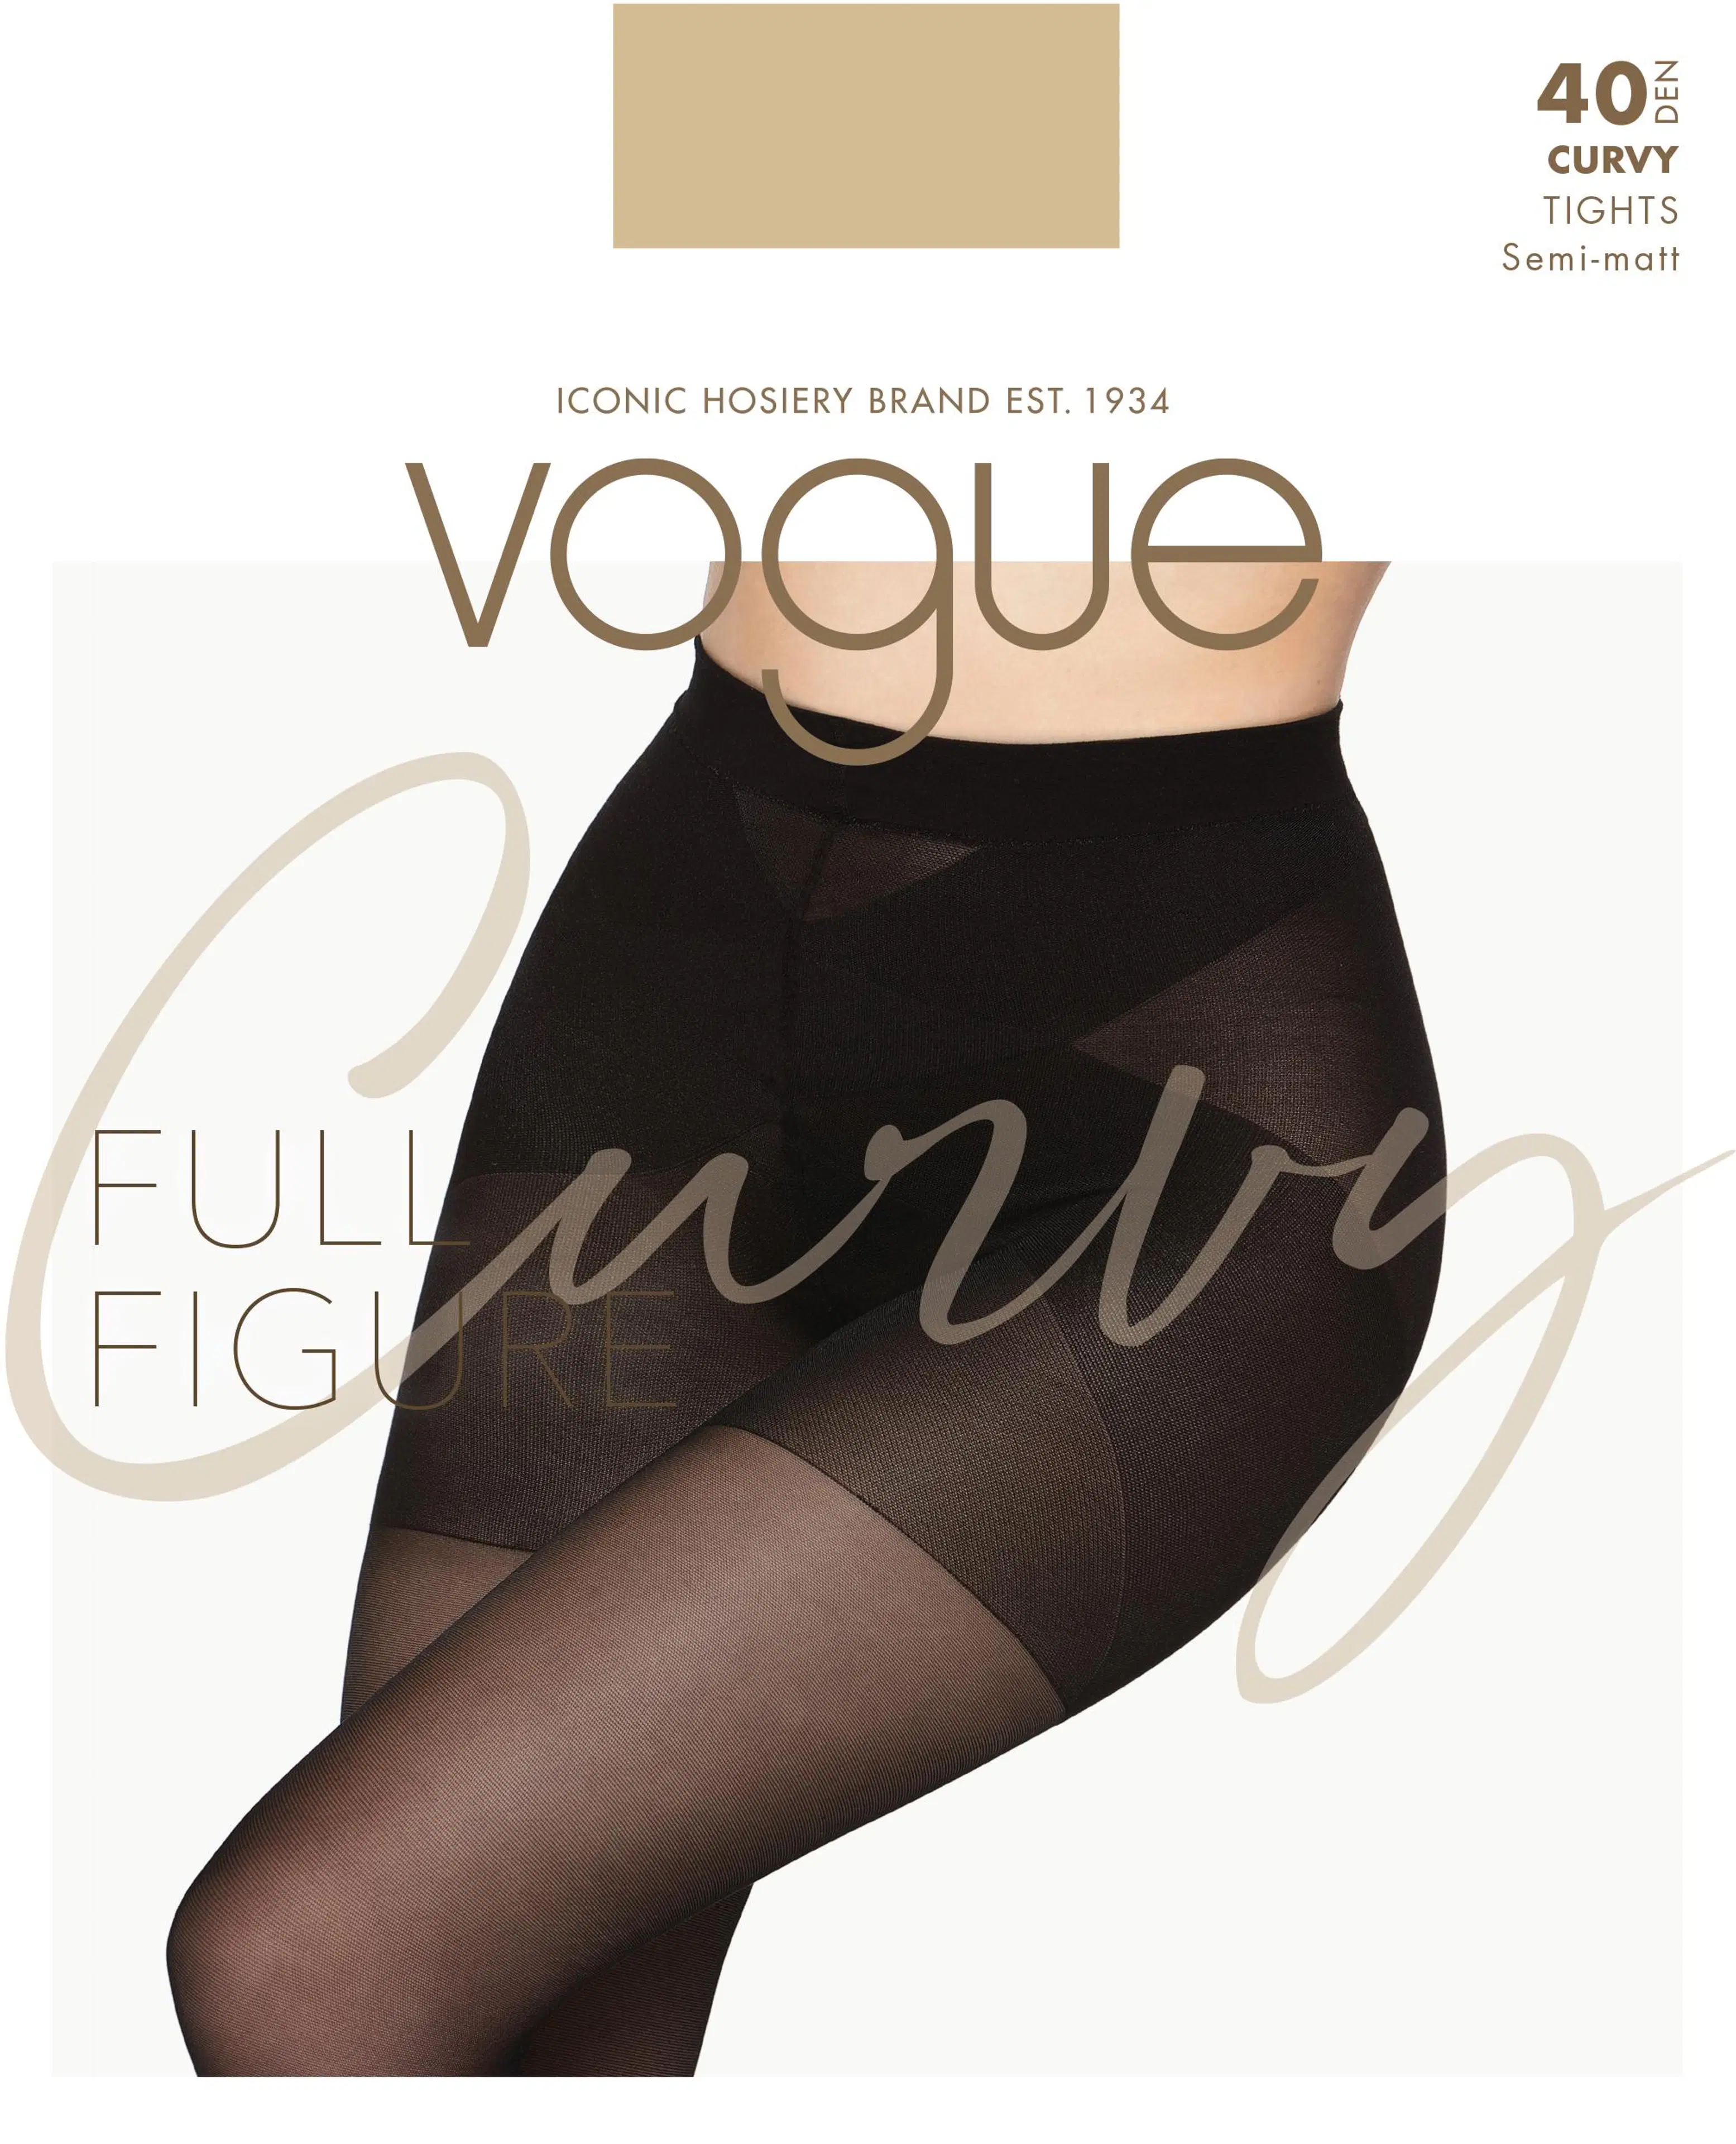 Vogue Curvy sukkahousut 40 den